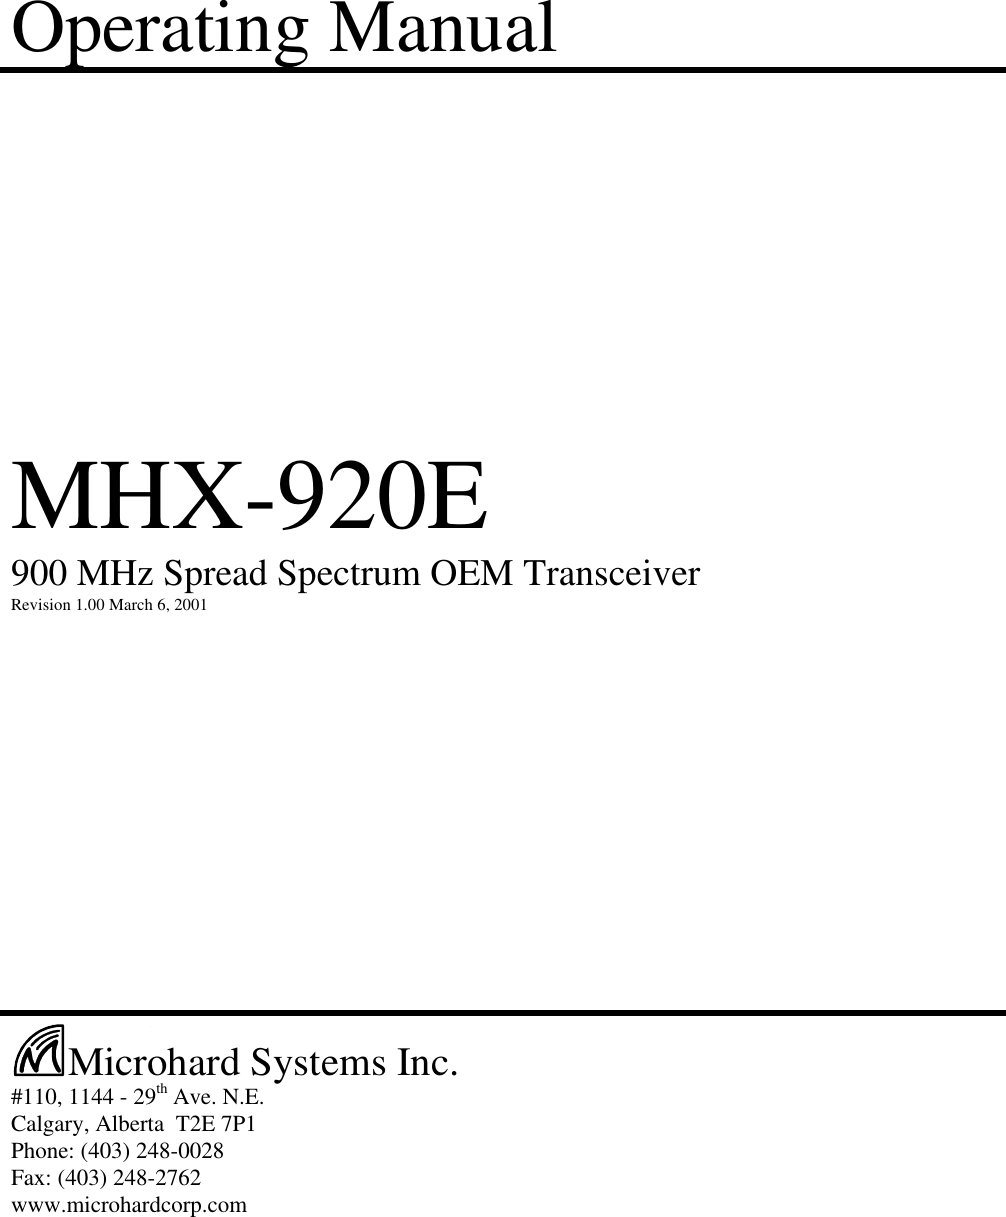 Operating ManualMHX-920E900 MHz Spread Spectrum OEM TransceiverRevision 1.00 March 6, 2001Microhard Systems Inc.#110, 1144 - 29th Ave. N.E.Calgary, Alberta  T2E 7P1Phone: (403) 248-0028Fax: (403) 248-2762www.microhardcorp.com